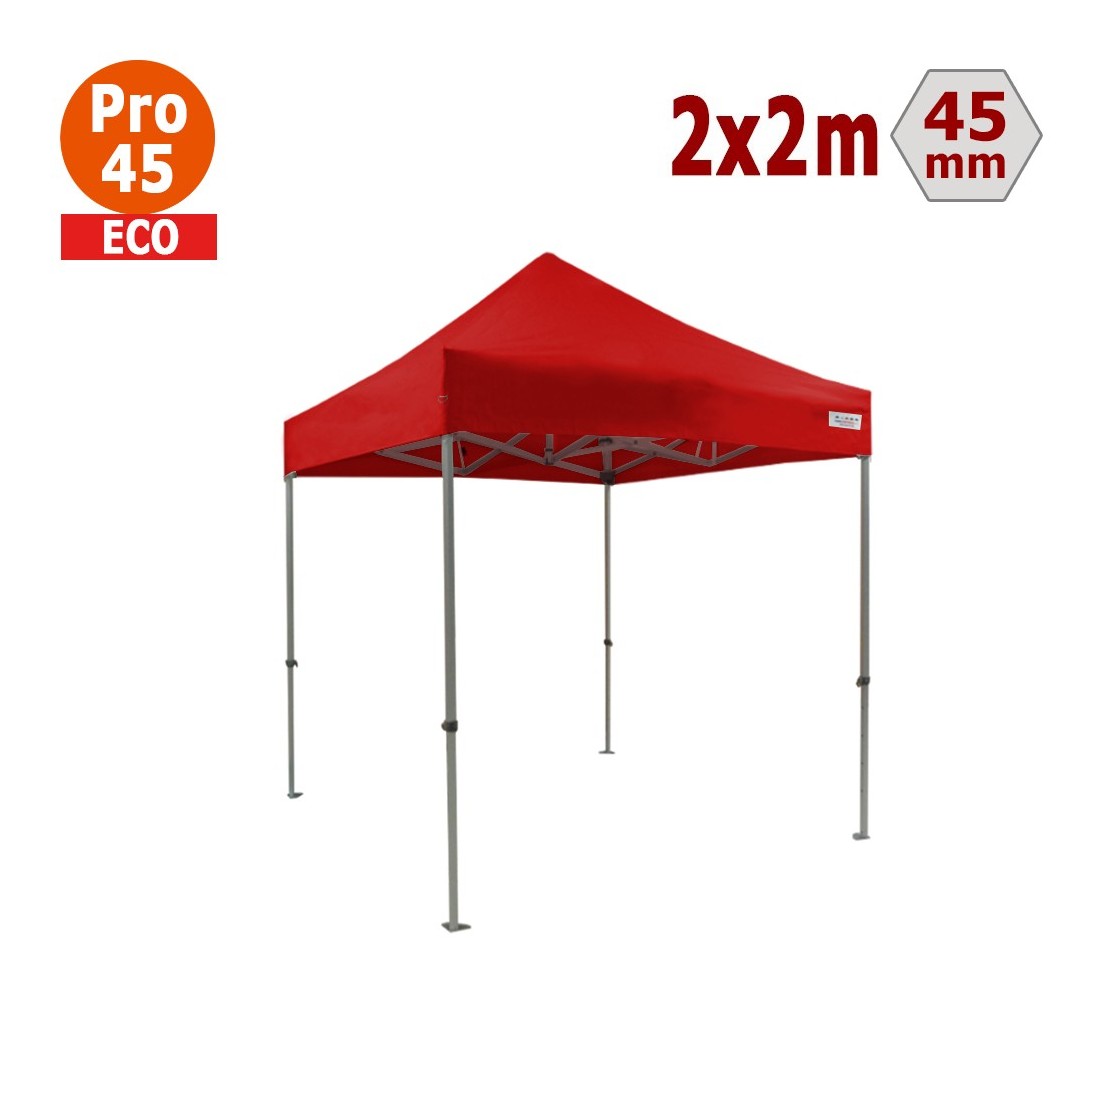 Tente pliante 2x2m Alu Pro 45 ECO (Rouge) - REF 1402S